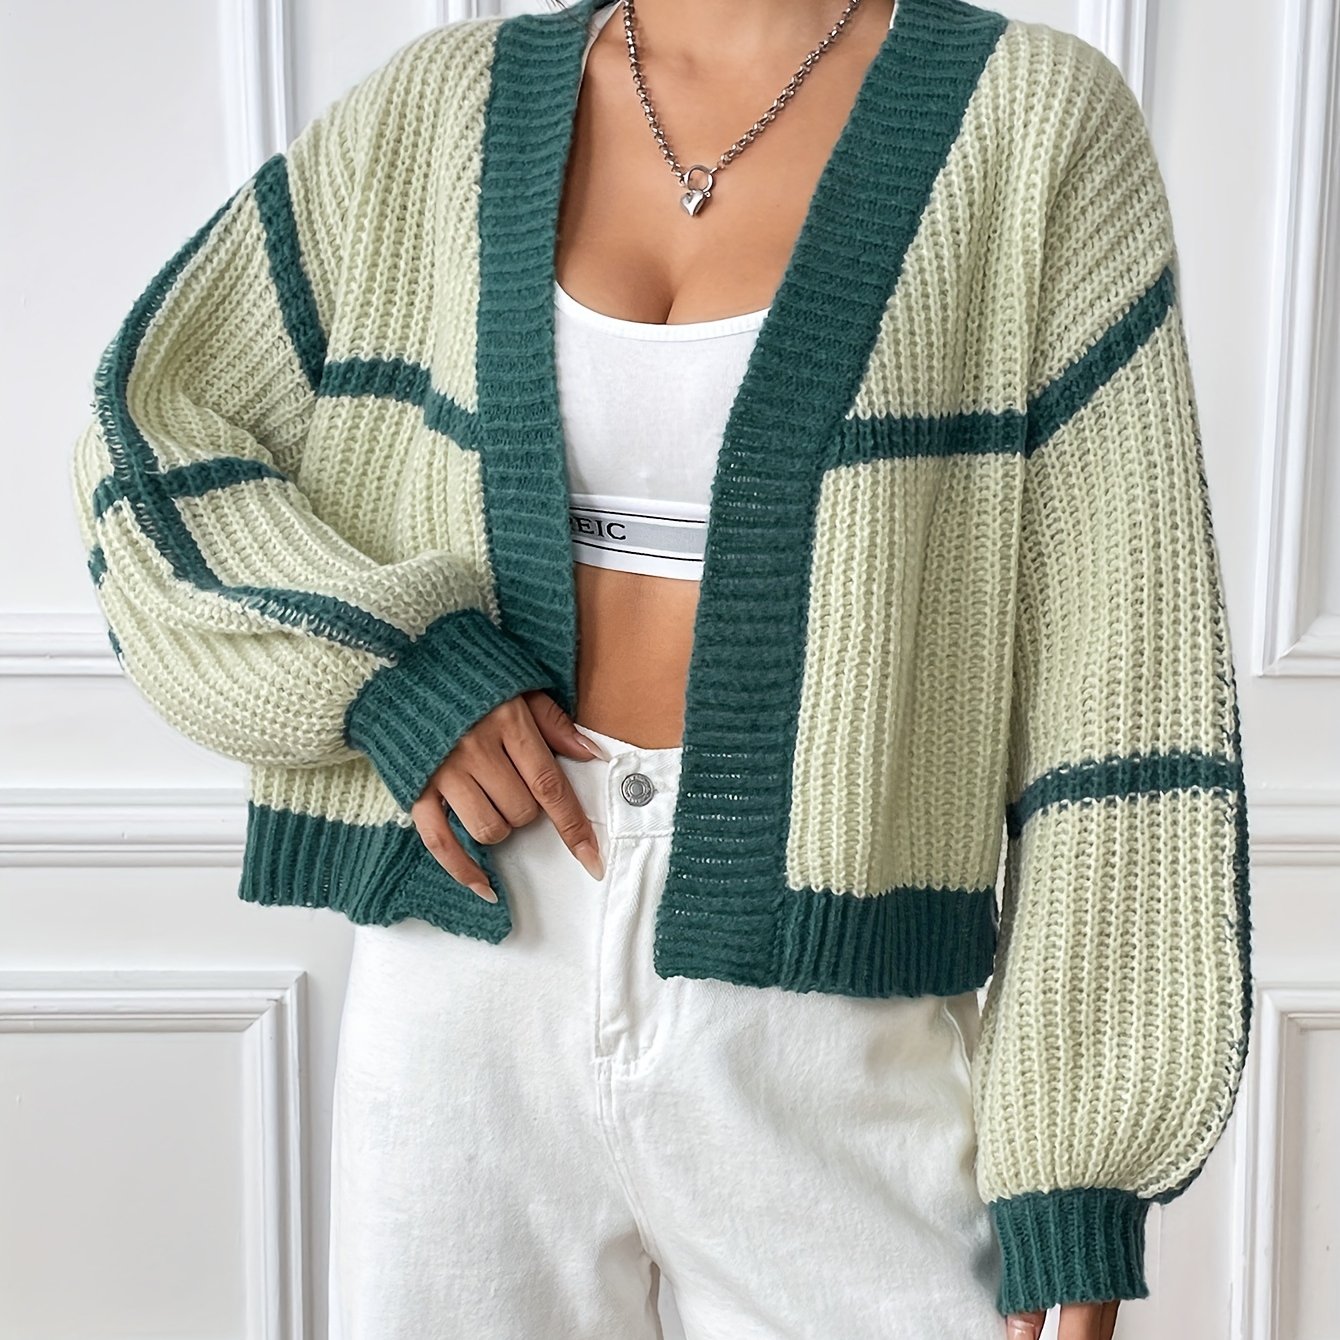 Cardigan Sweaters Outwear For Women Knit Contrast Stitch Crop